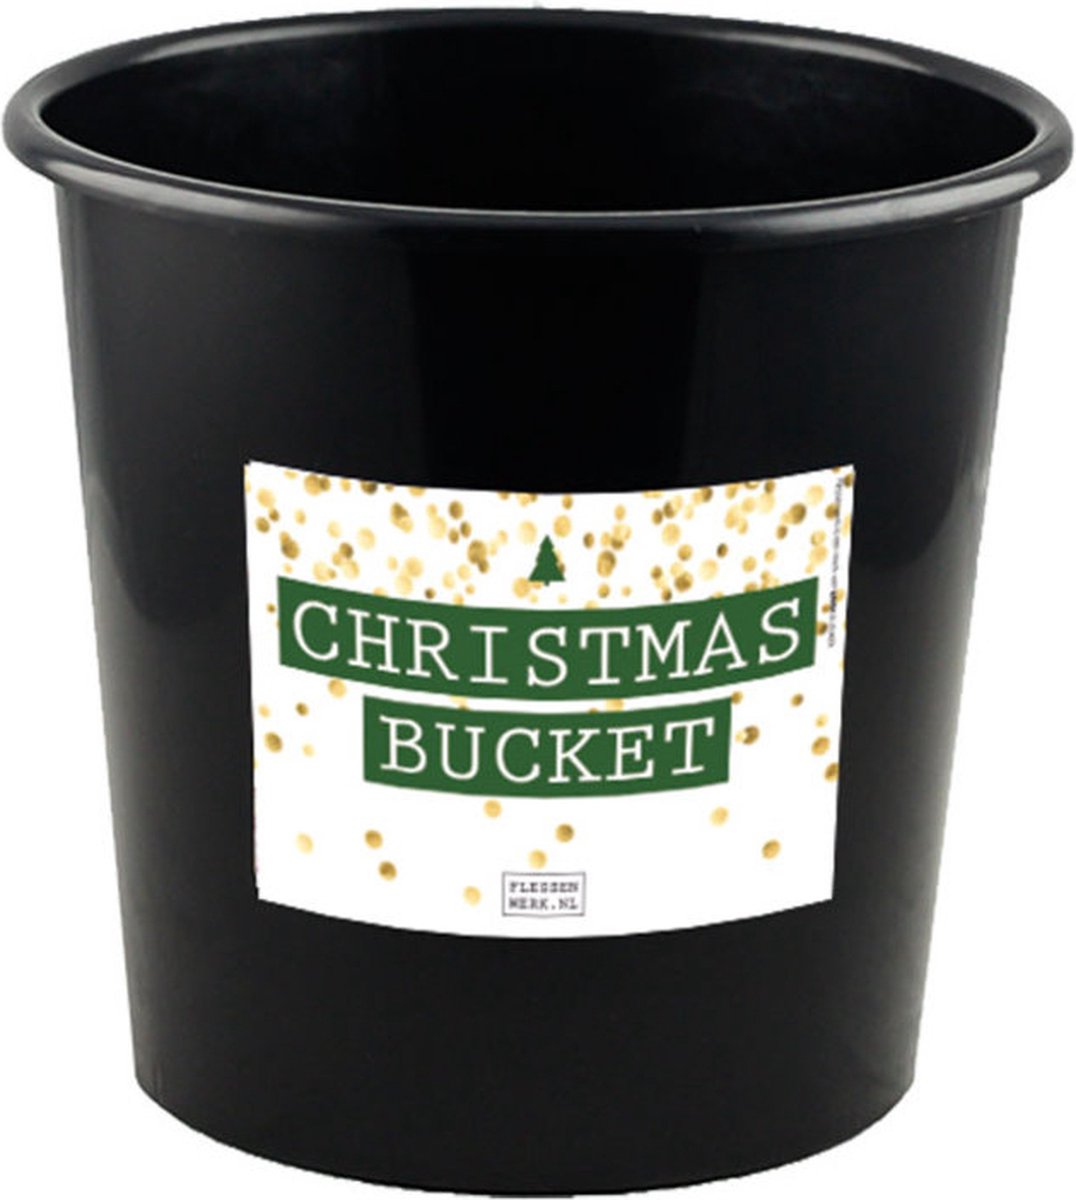 Christmas bucket - groot (8 liter) - per 12 stuks